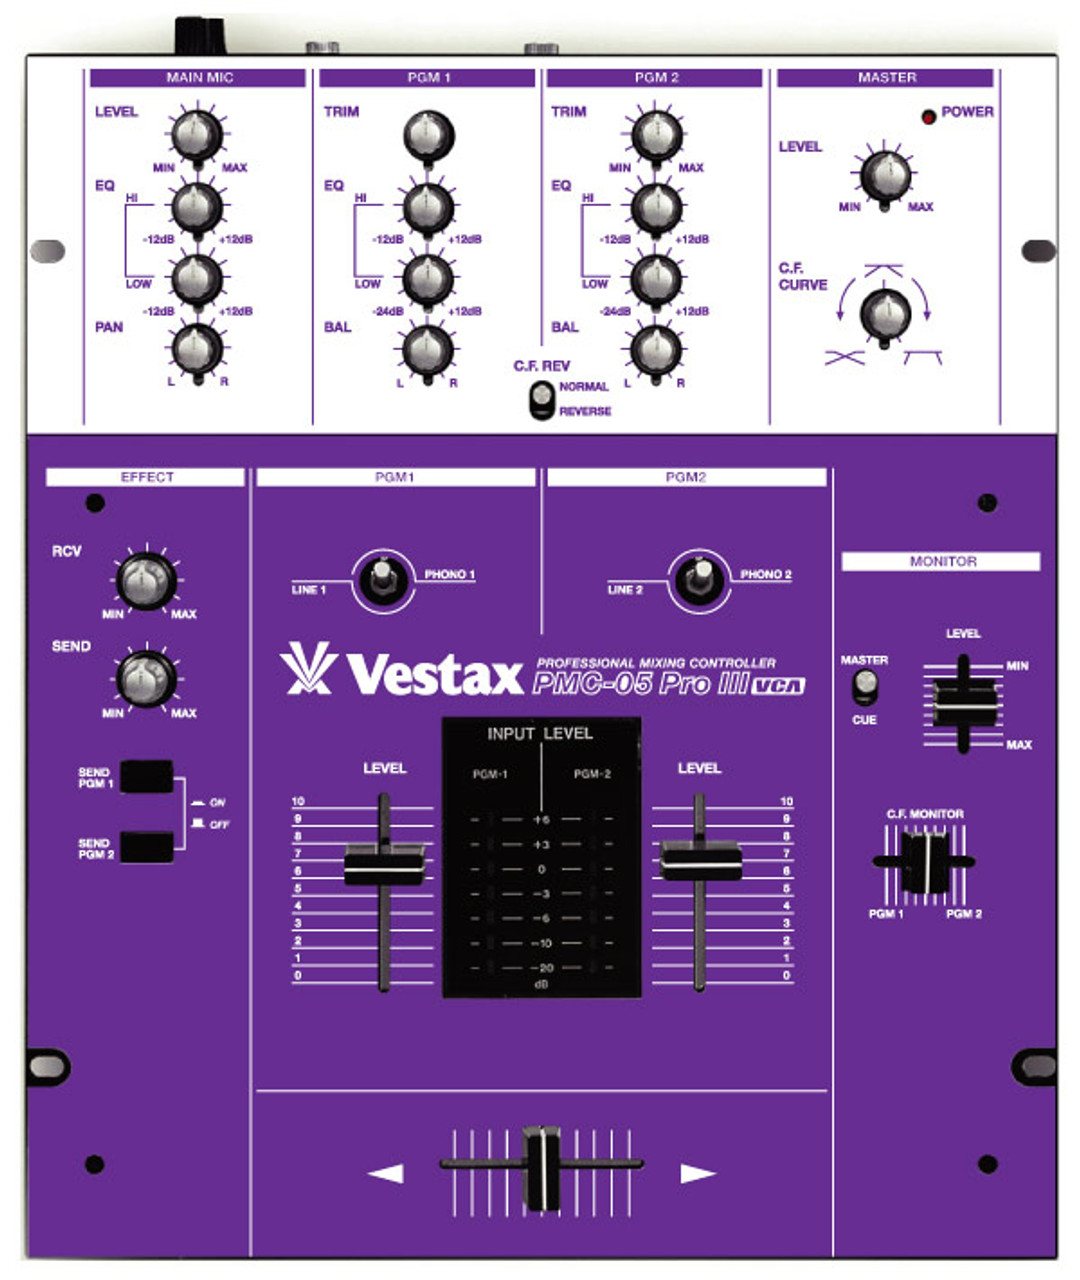 Vestax PMC05 Pro III Skinz - Colors